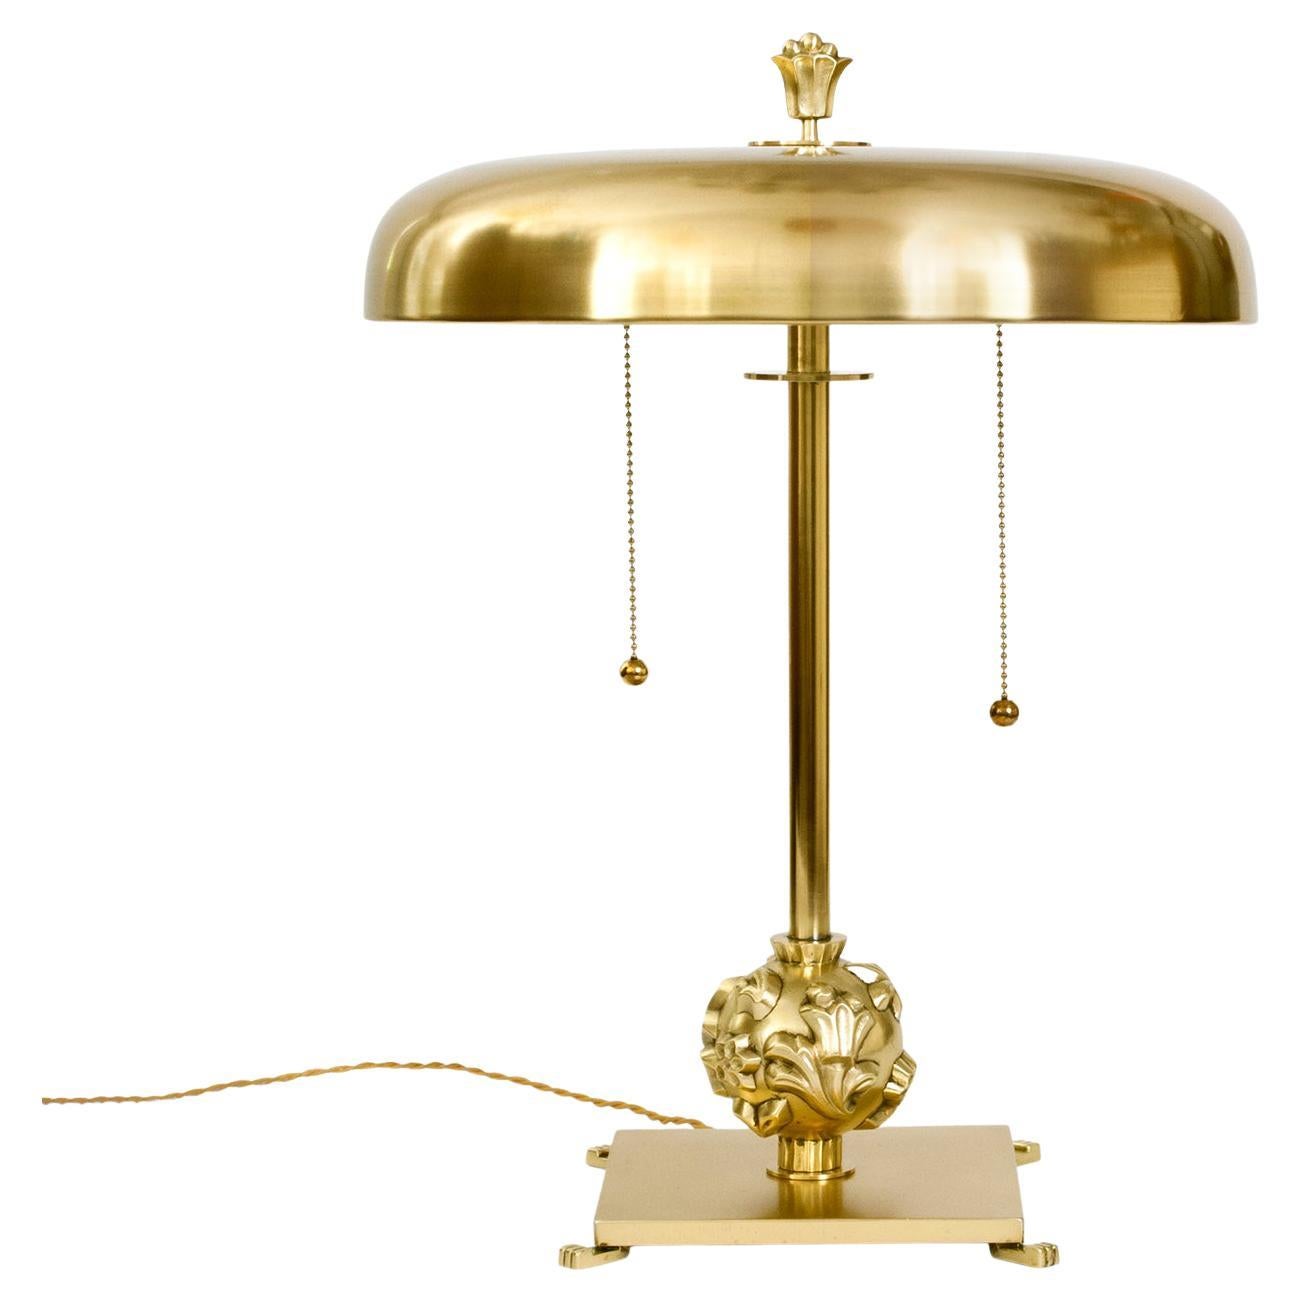 Elis Bergh designed Swedish Art Deco Lamp for Kosta